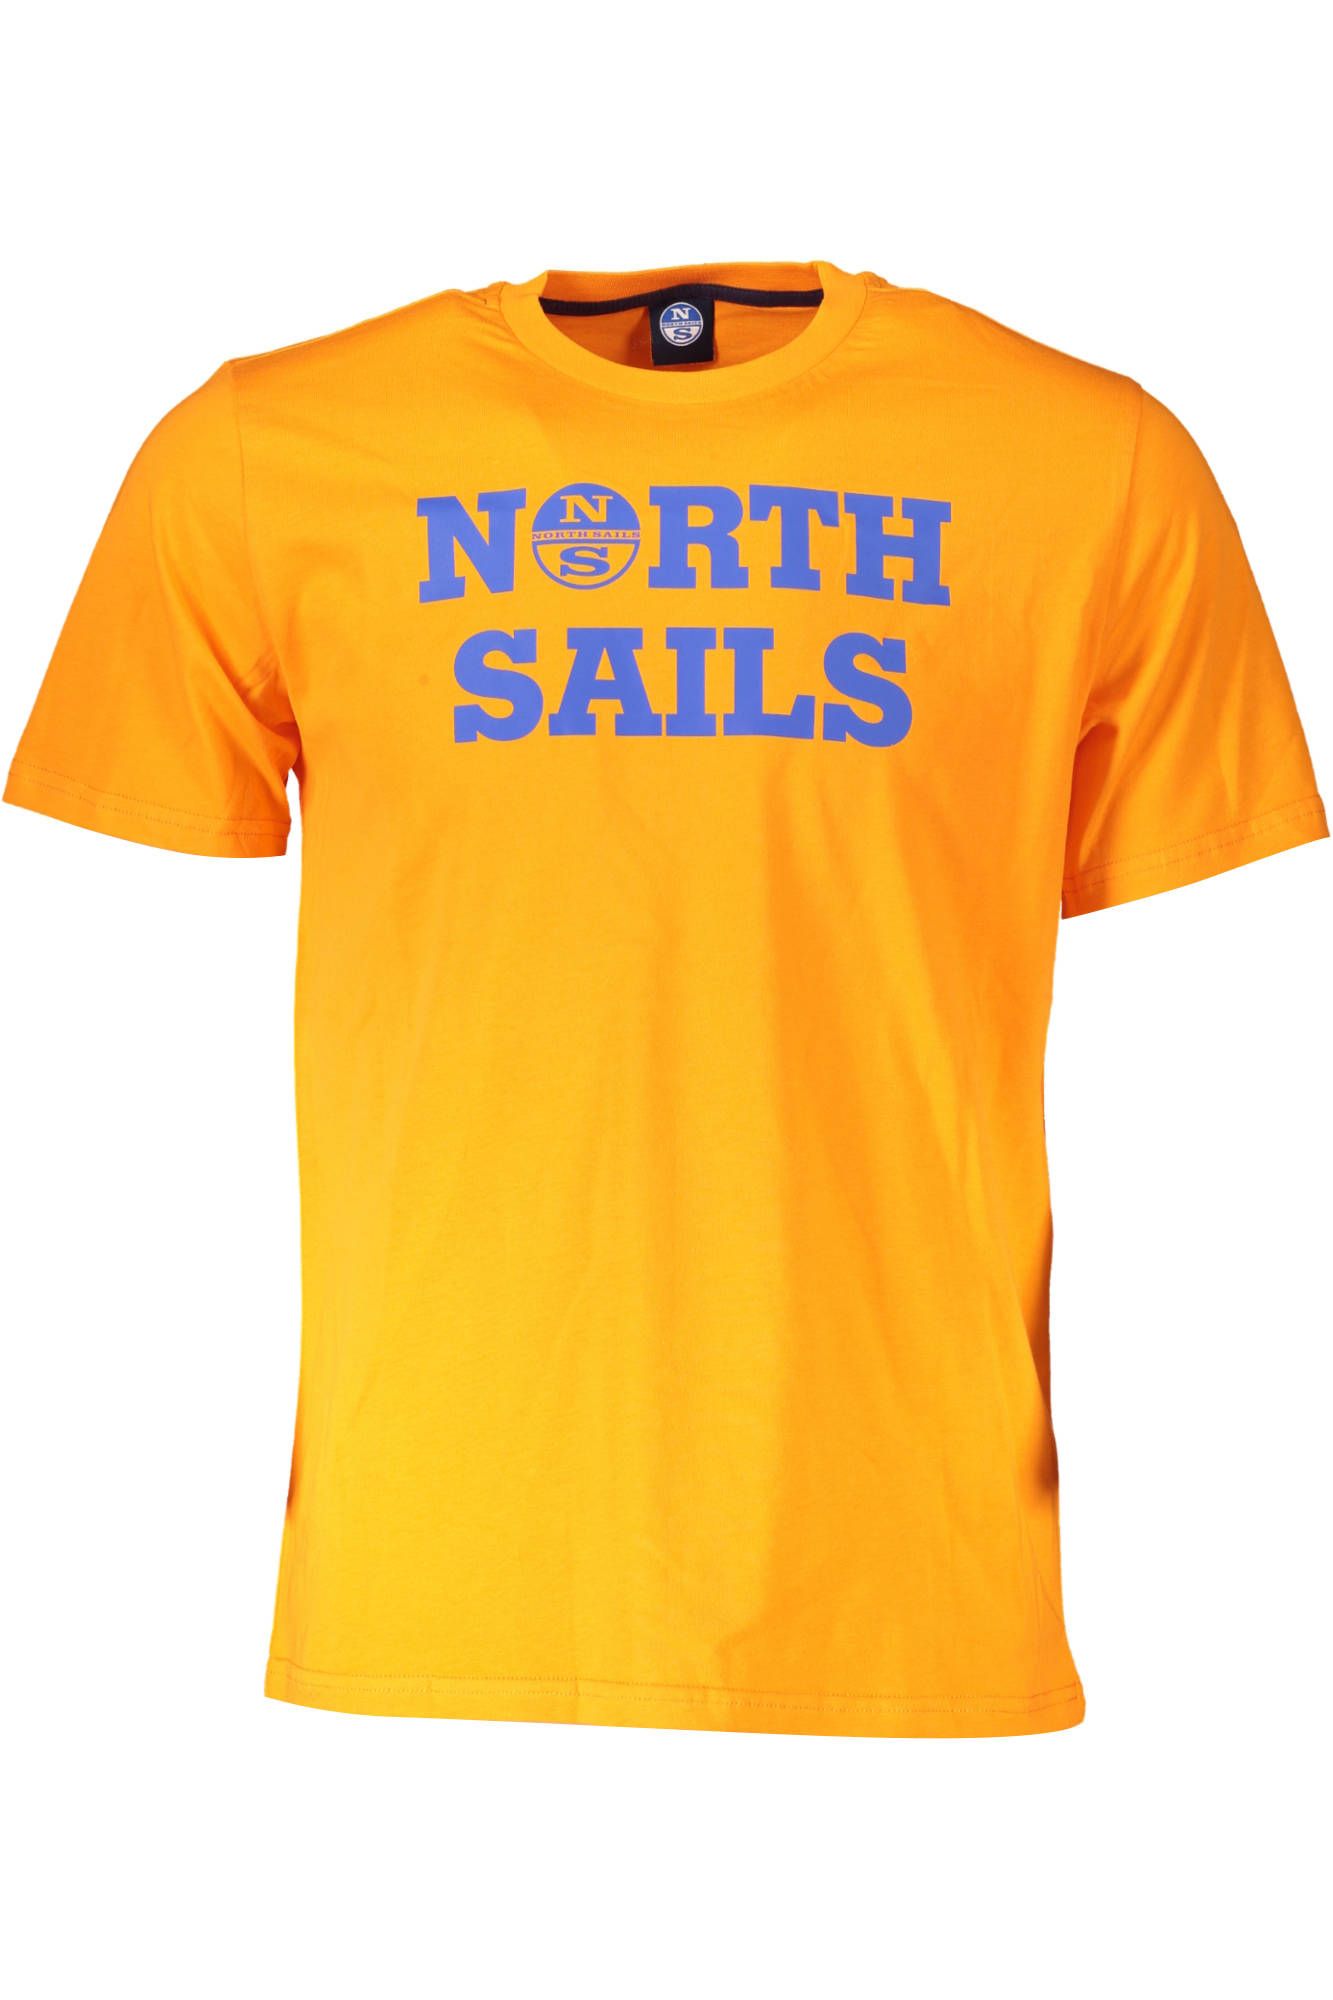 North Sails Vibrant Orange Cotton Tee with Logo Print